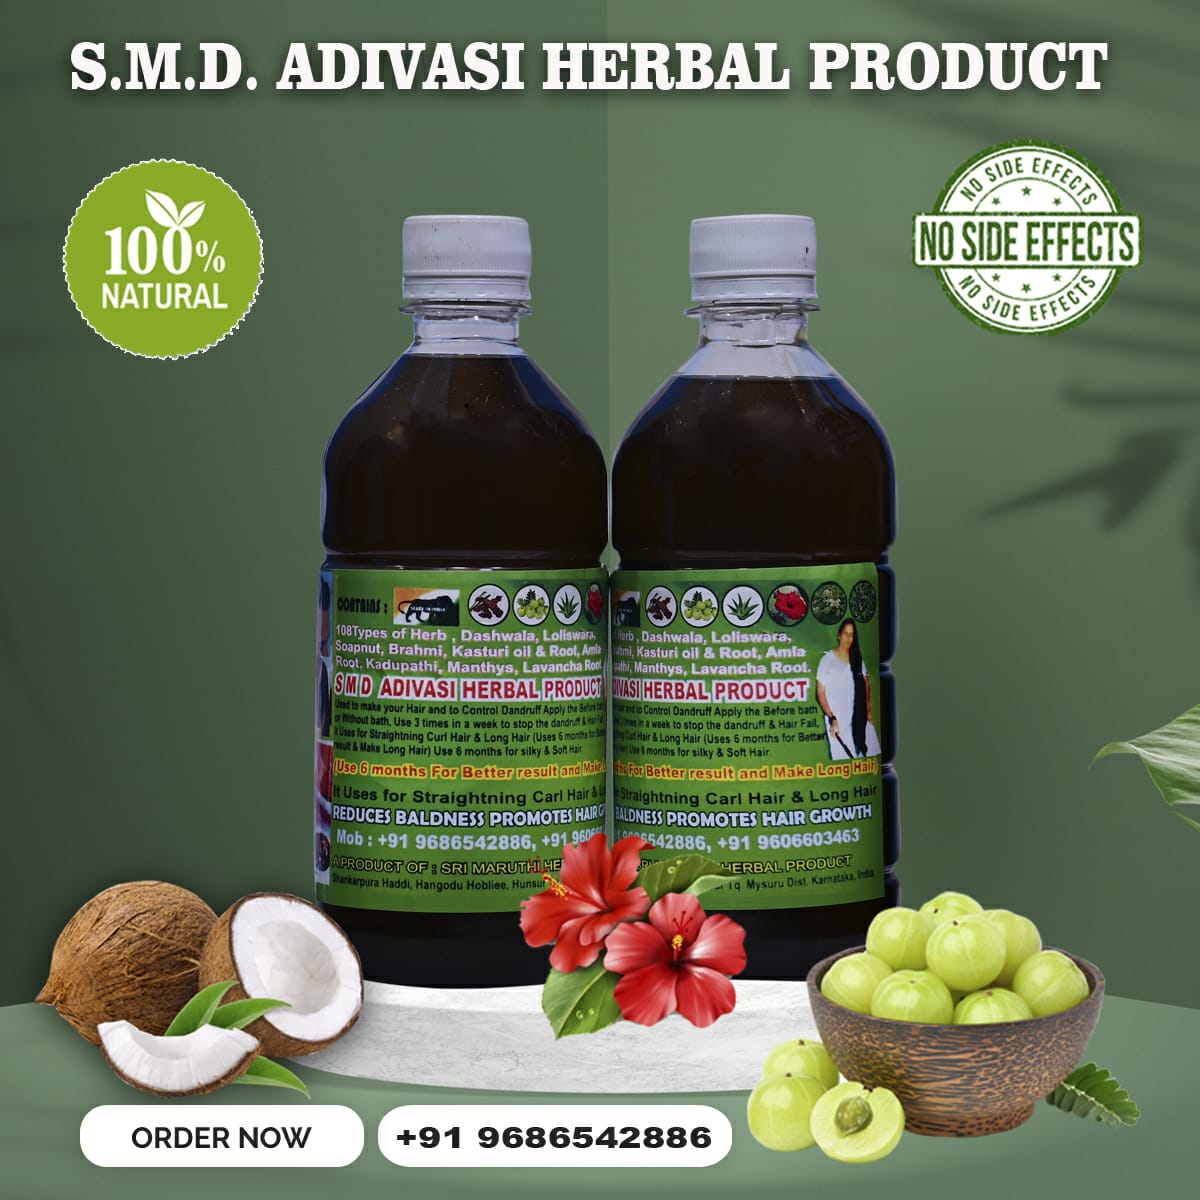 Smd Ayurvedic Herbals